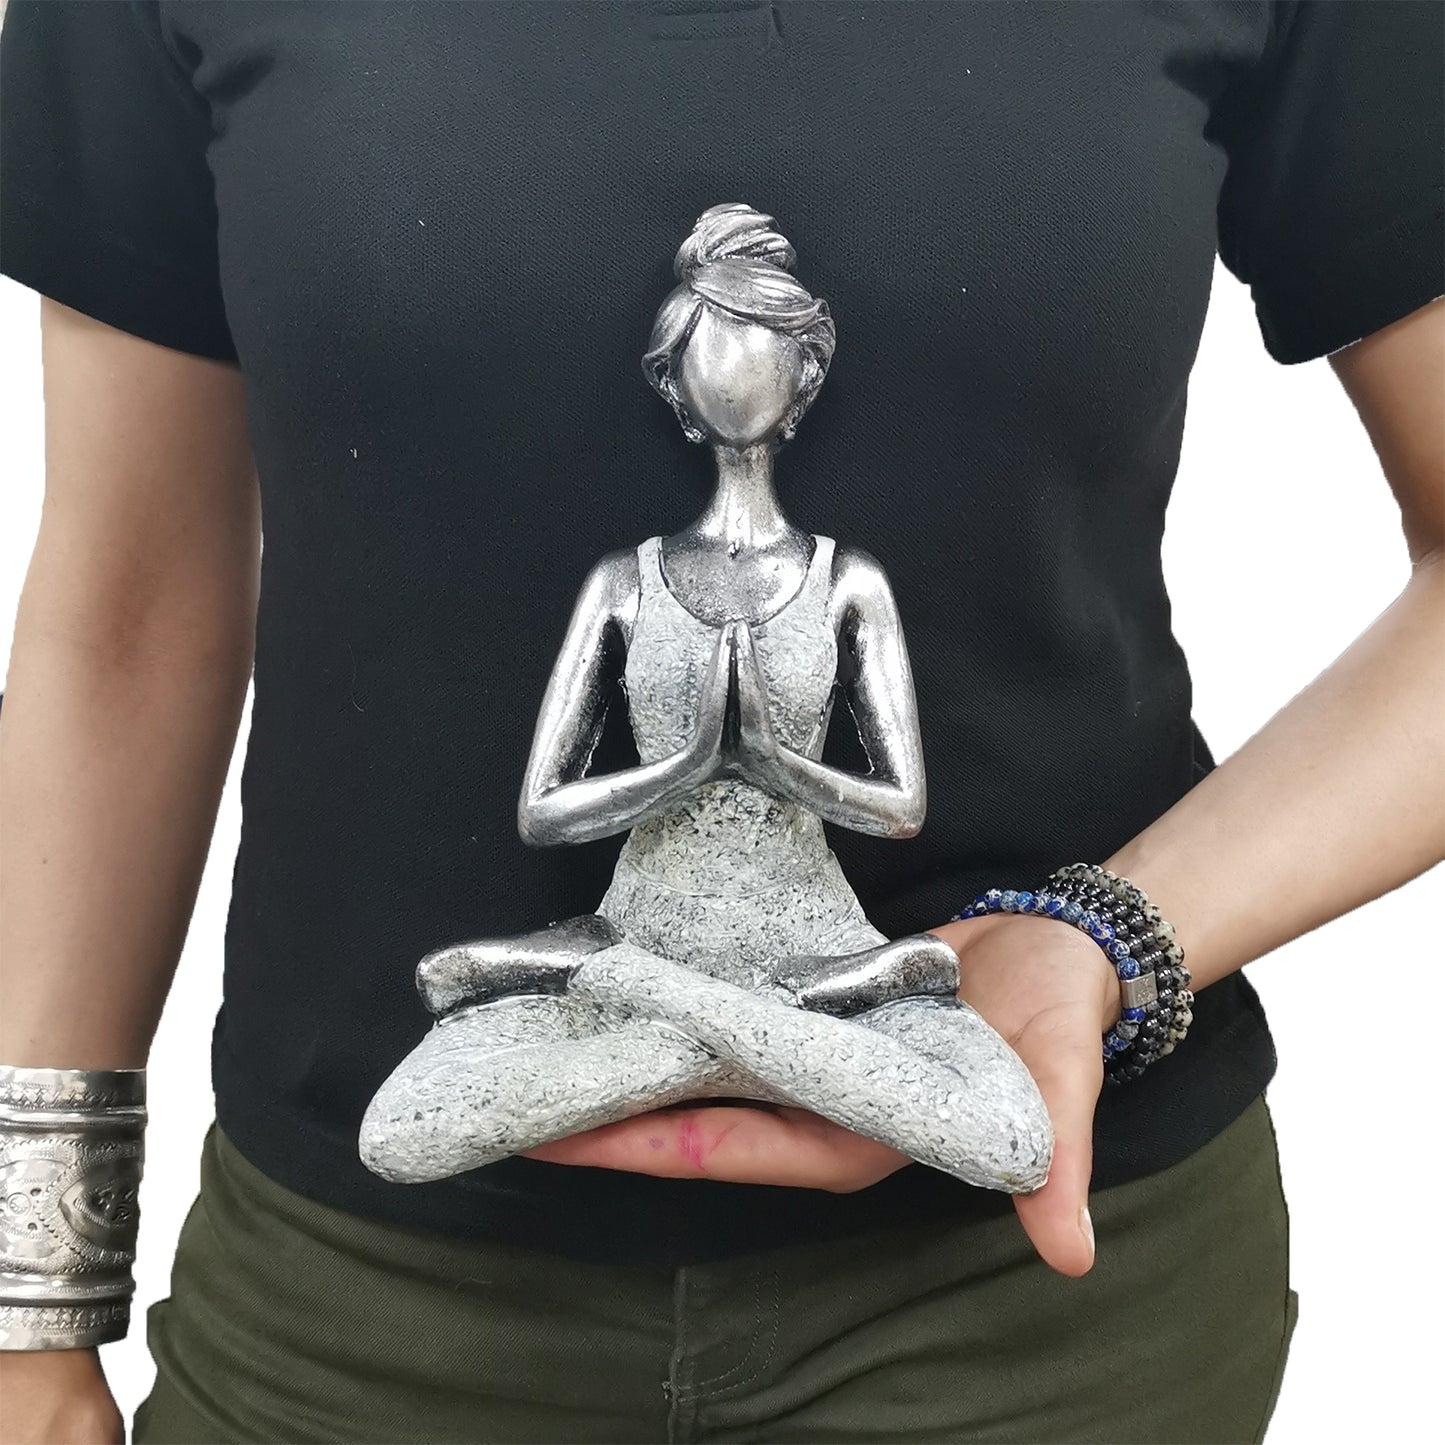 Yoga Lady Figure - Silver & White 24cm